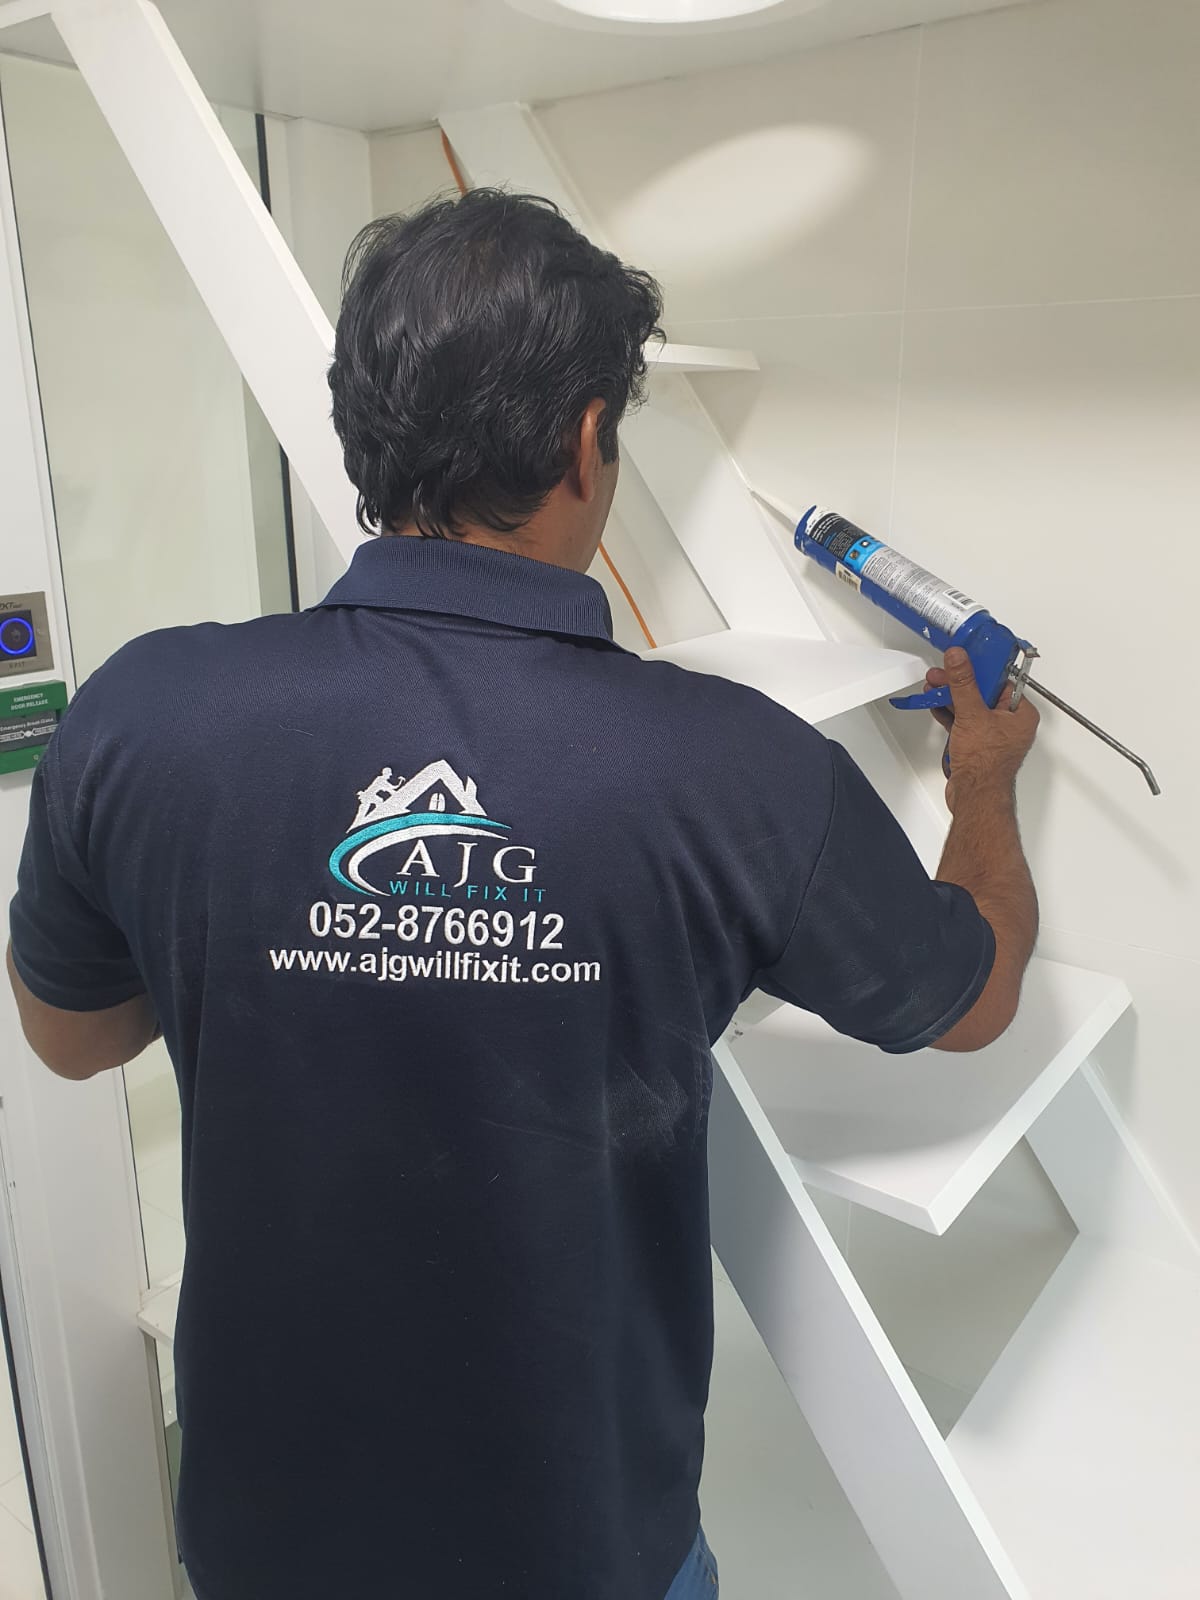 Handyman Services in Dubai, Affordable Handyman Services Dubai